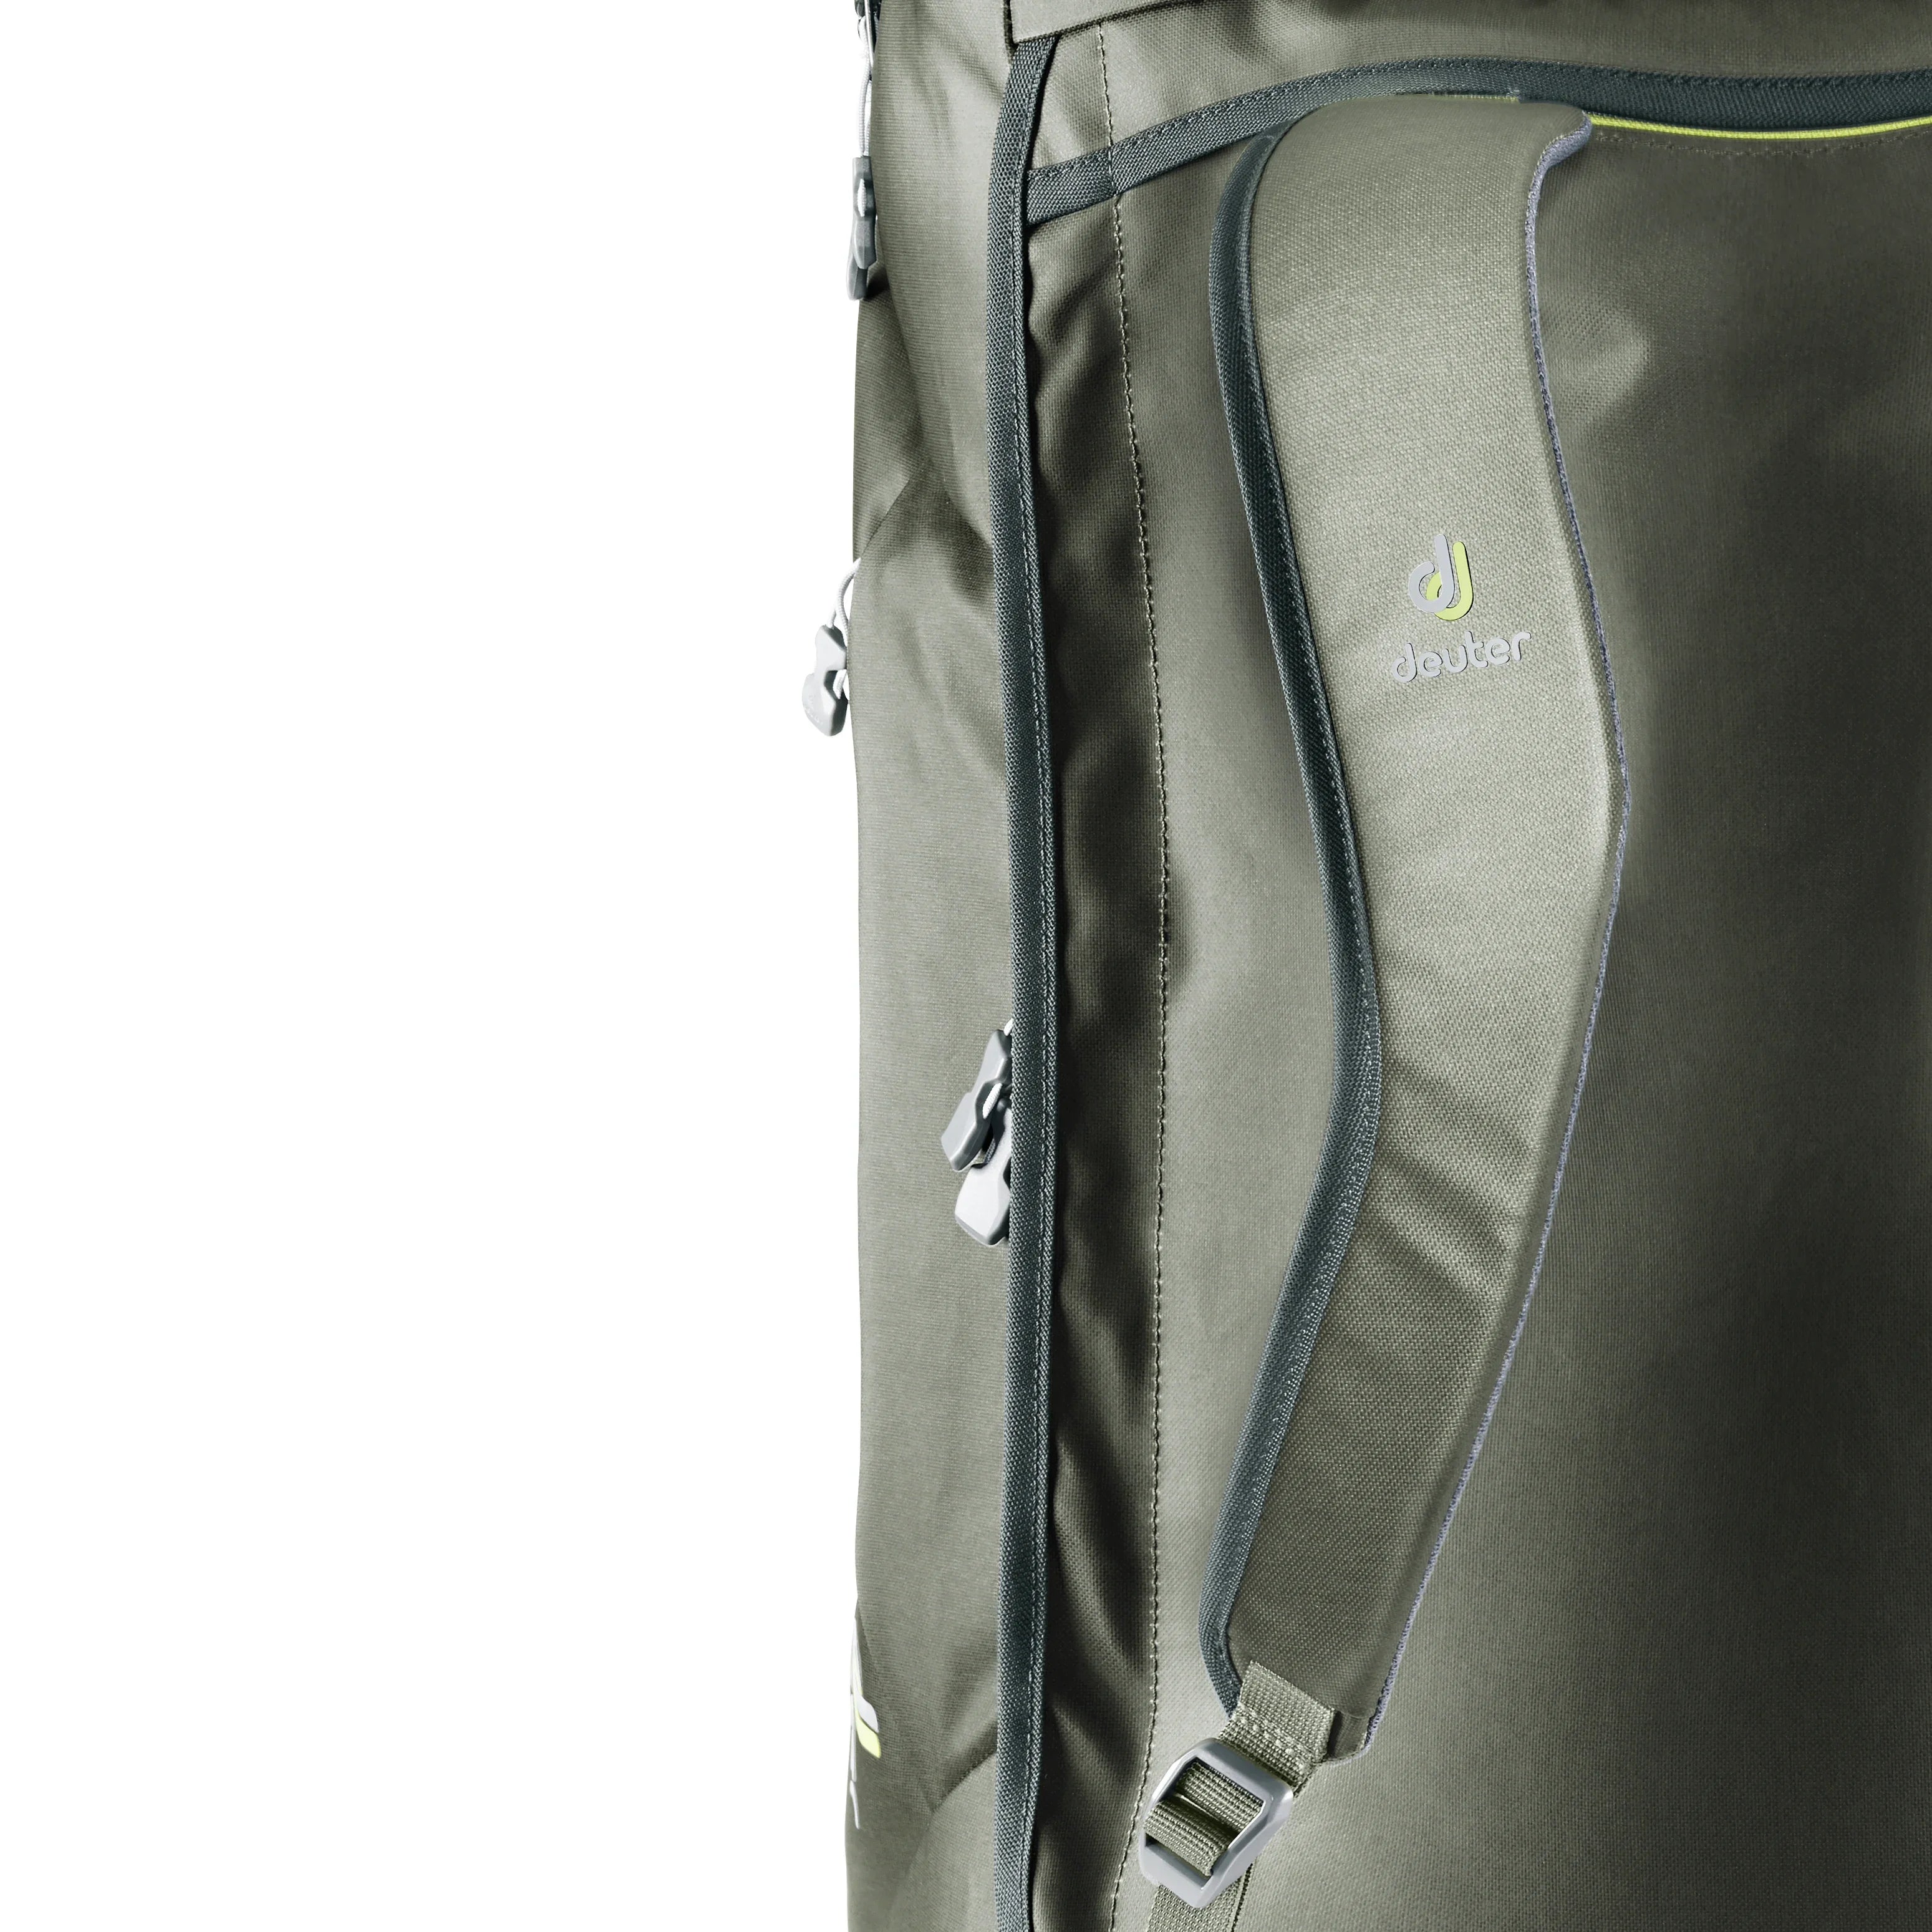 Deuter Travel Aviant Duffle Pro 40 travel bag 52 cm - jade-seagreen